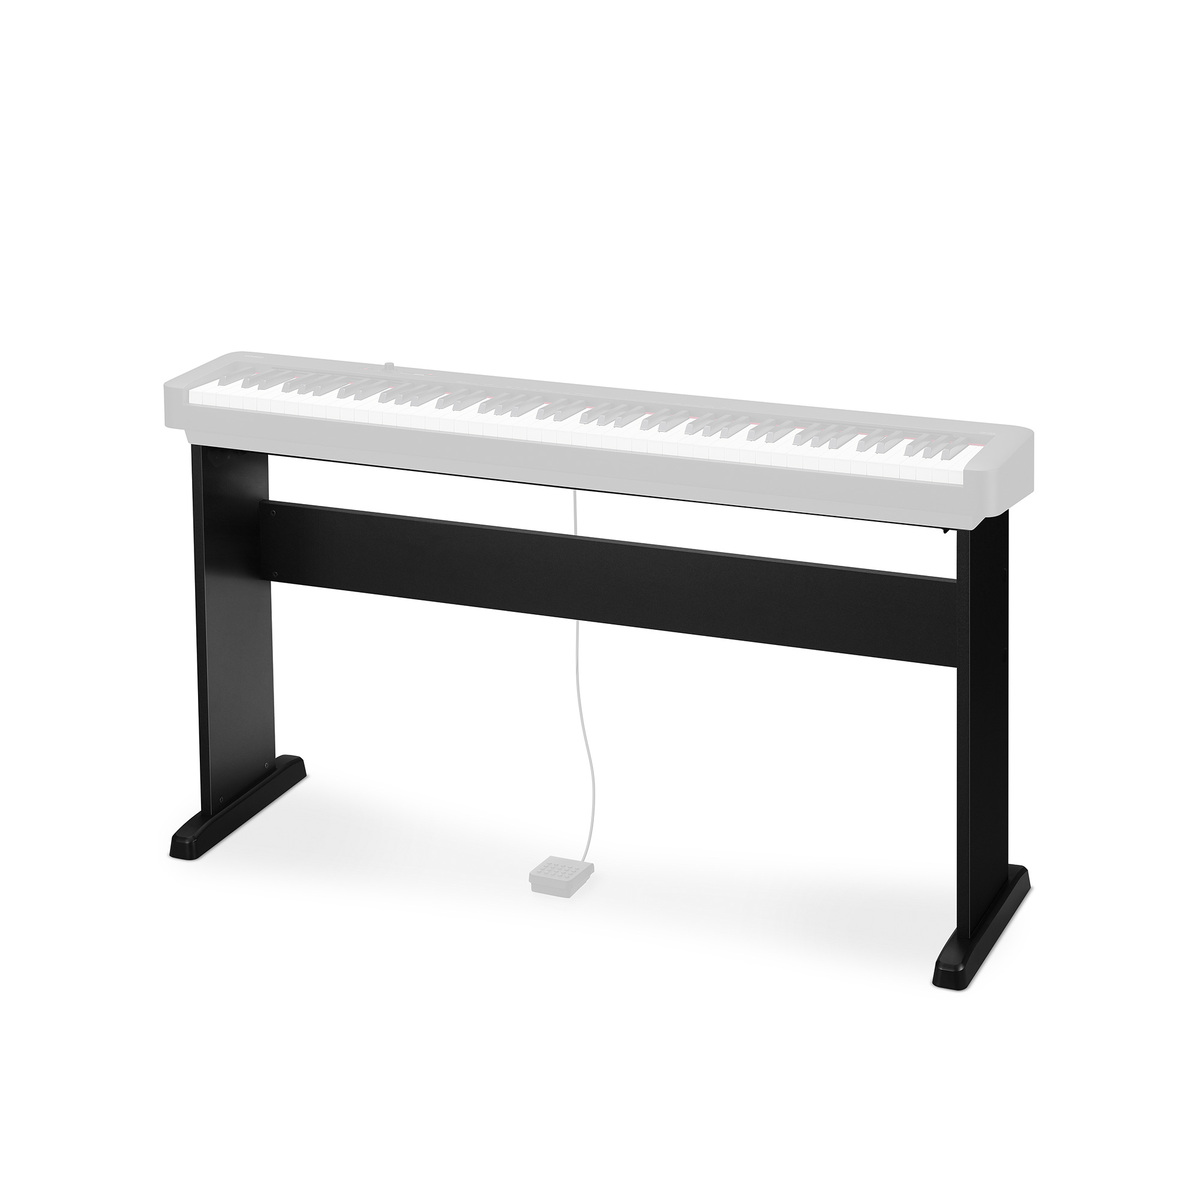 Casio Digital Piano CDP-S100